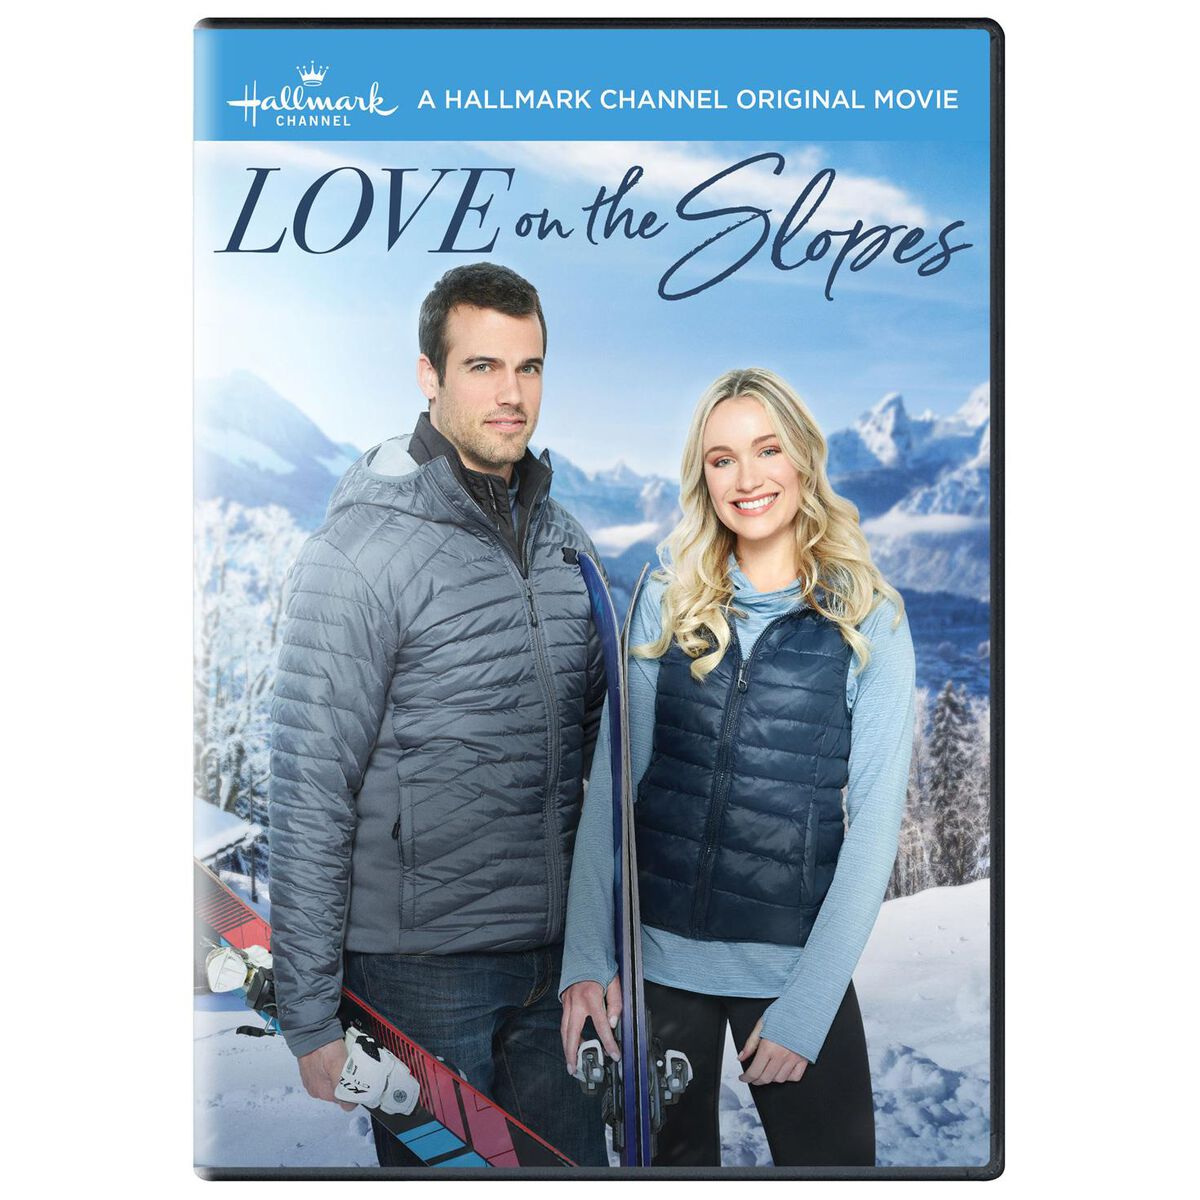 Love on the Slopes DVD Hallmark Channel Hallmark